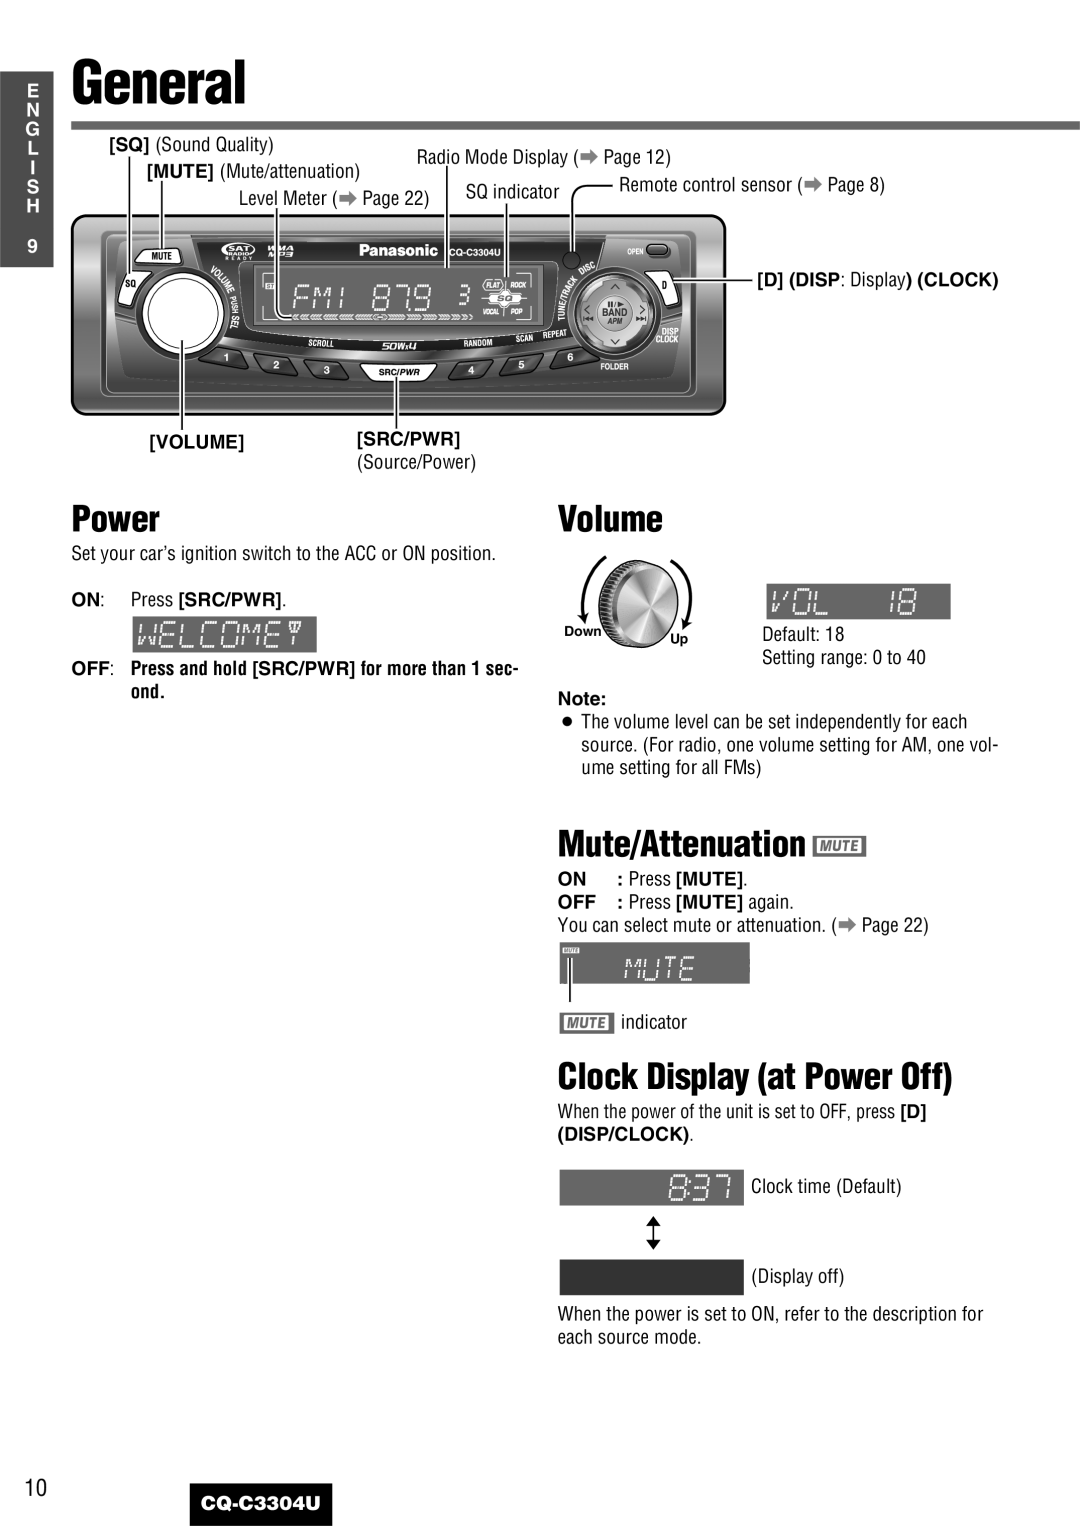 Panasonic CQ-C3304U warranty General, Volume, Mute/Attenuation, Clock Display at Power Off 